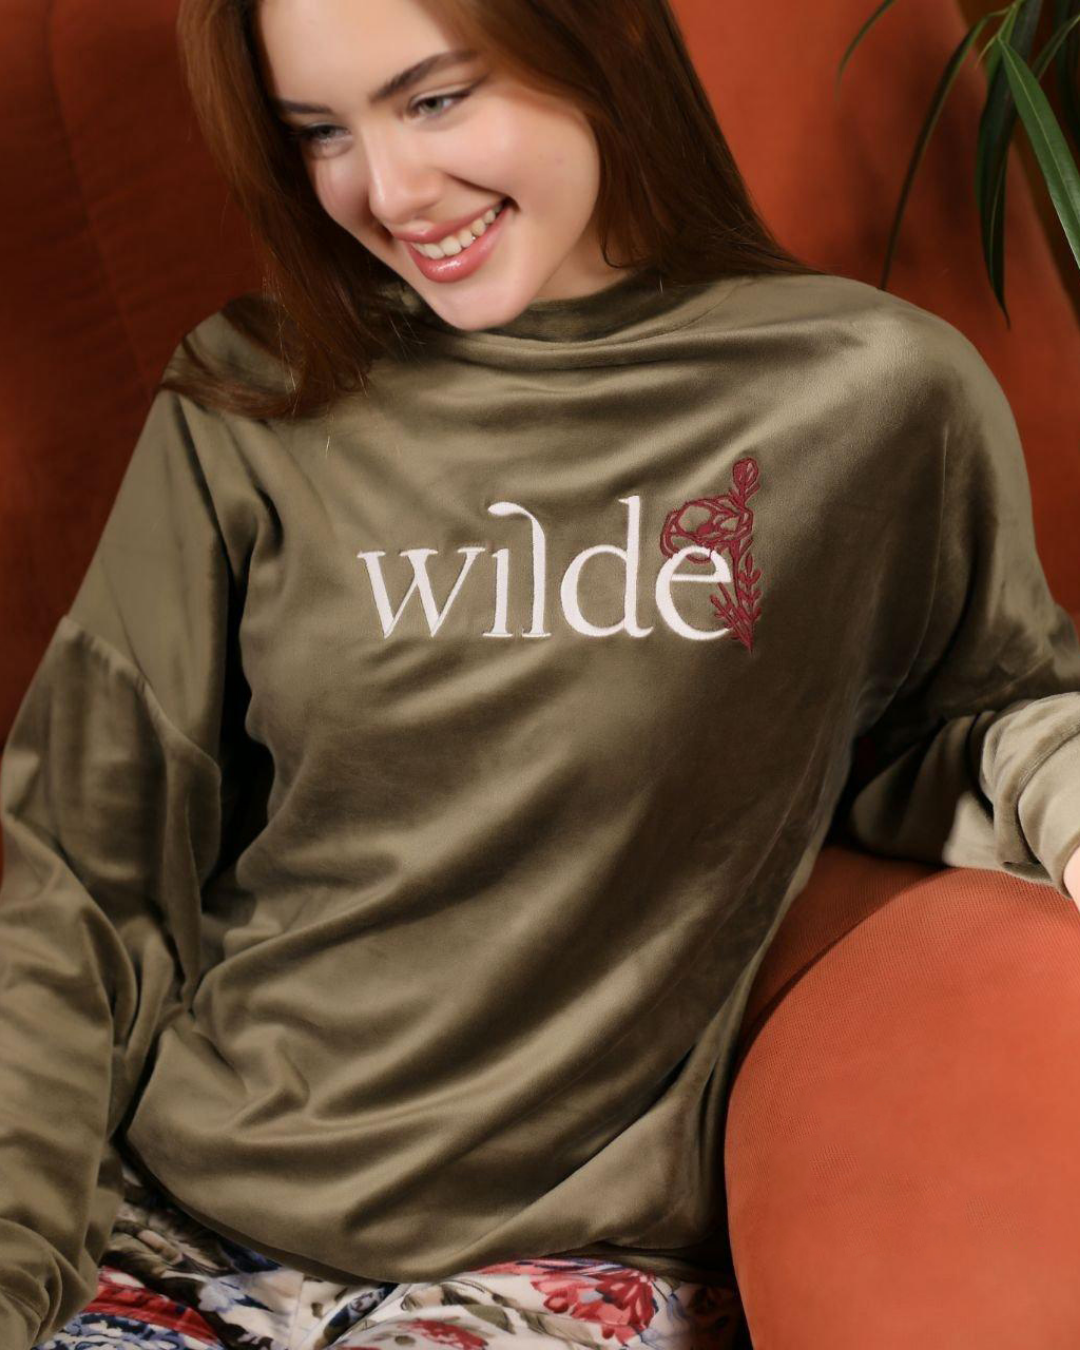 wilde women's pajamas printed on the chest